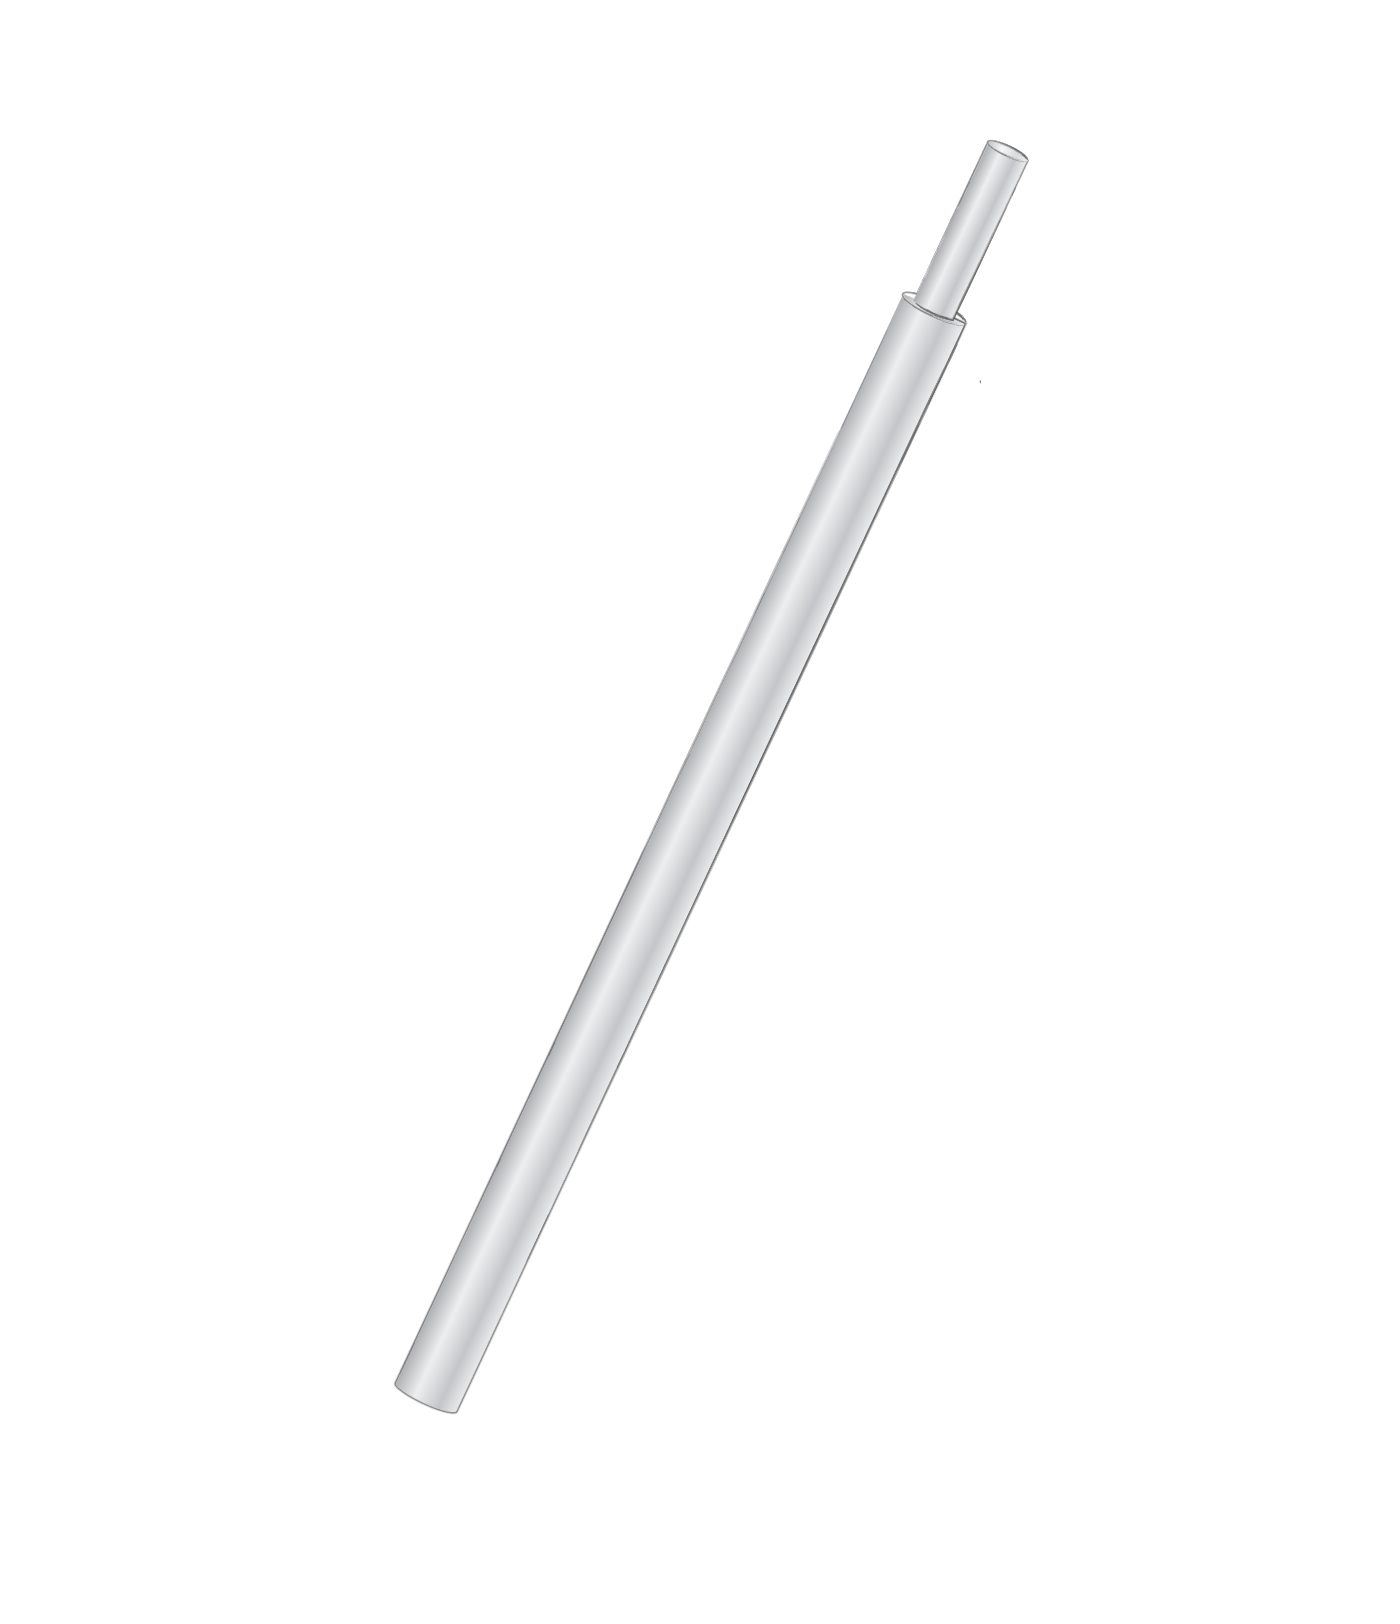  Tube ø35 mm, L 1.3 m, à enficher 